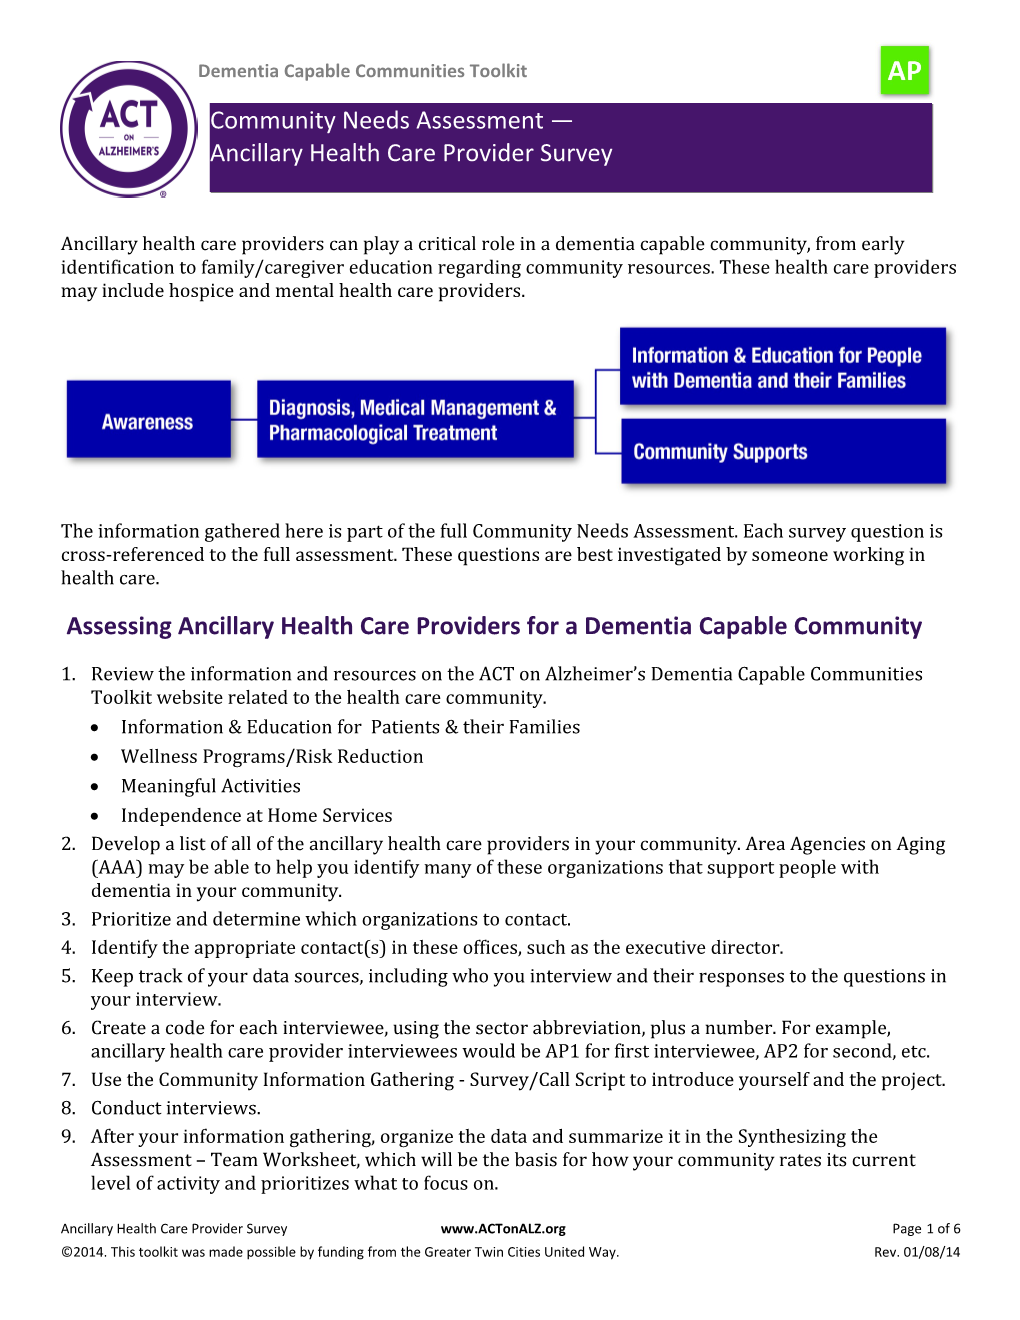 Assess Ancillary Dementia Capable Communities Toolkit